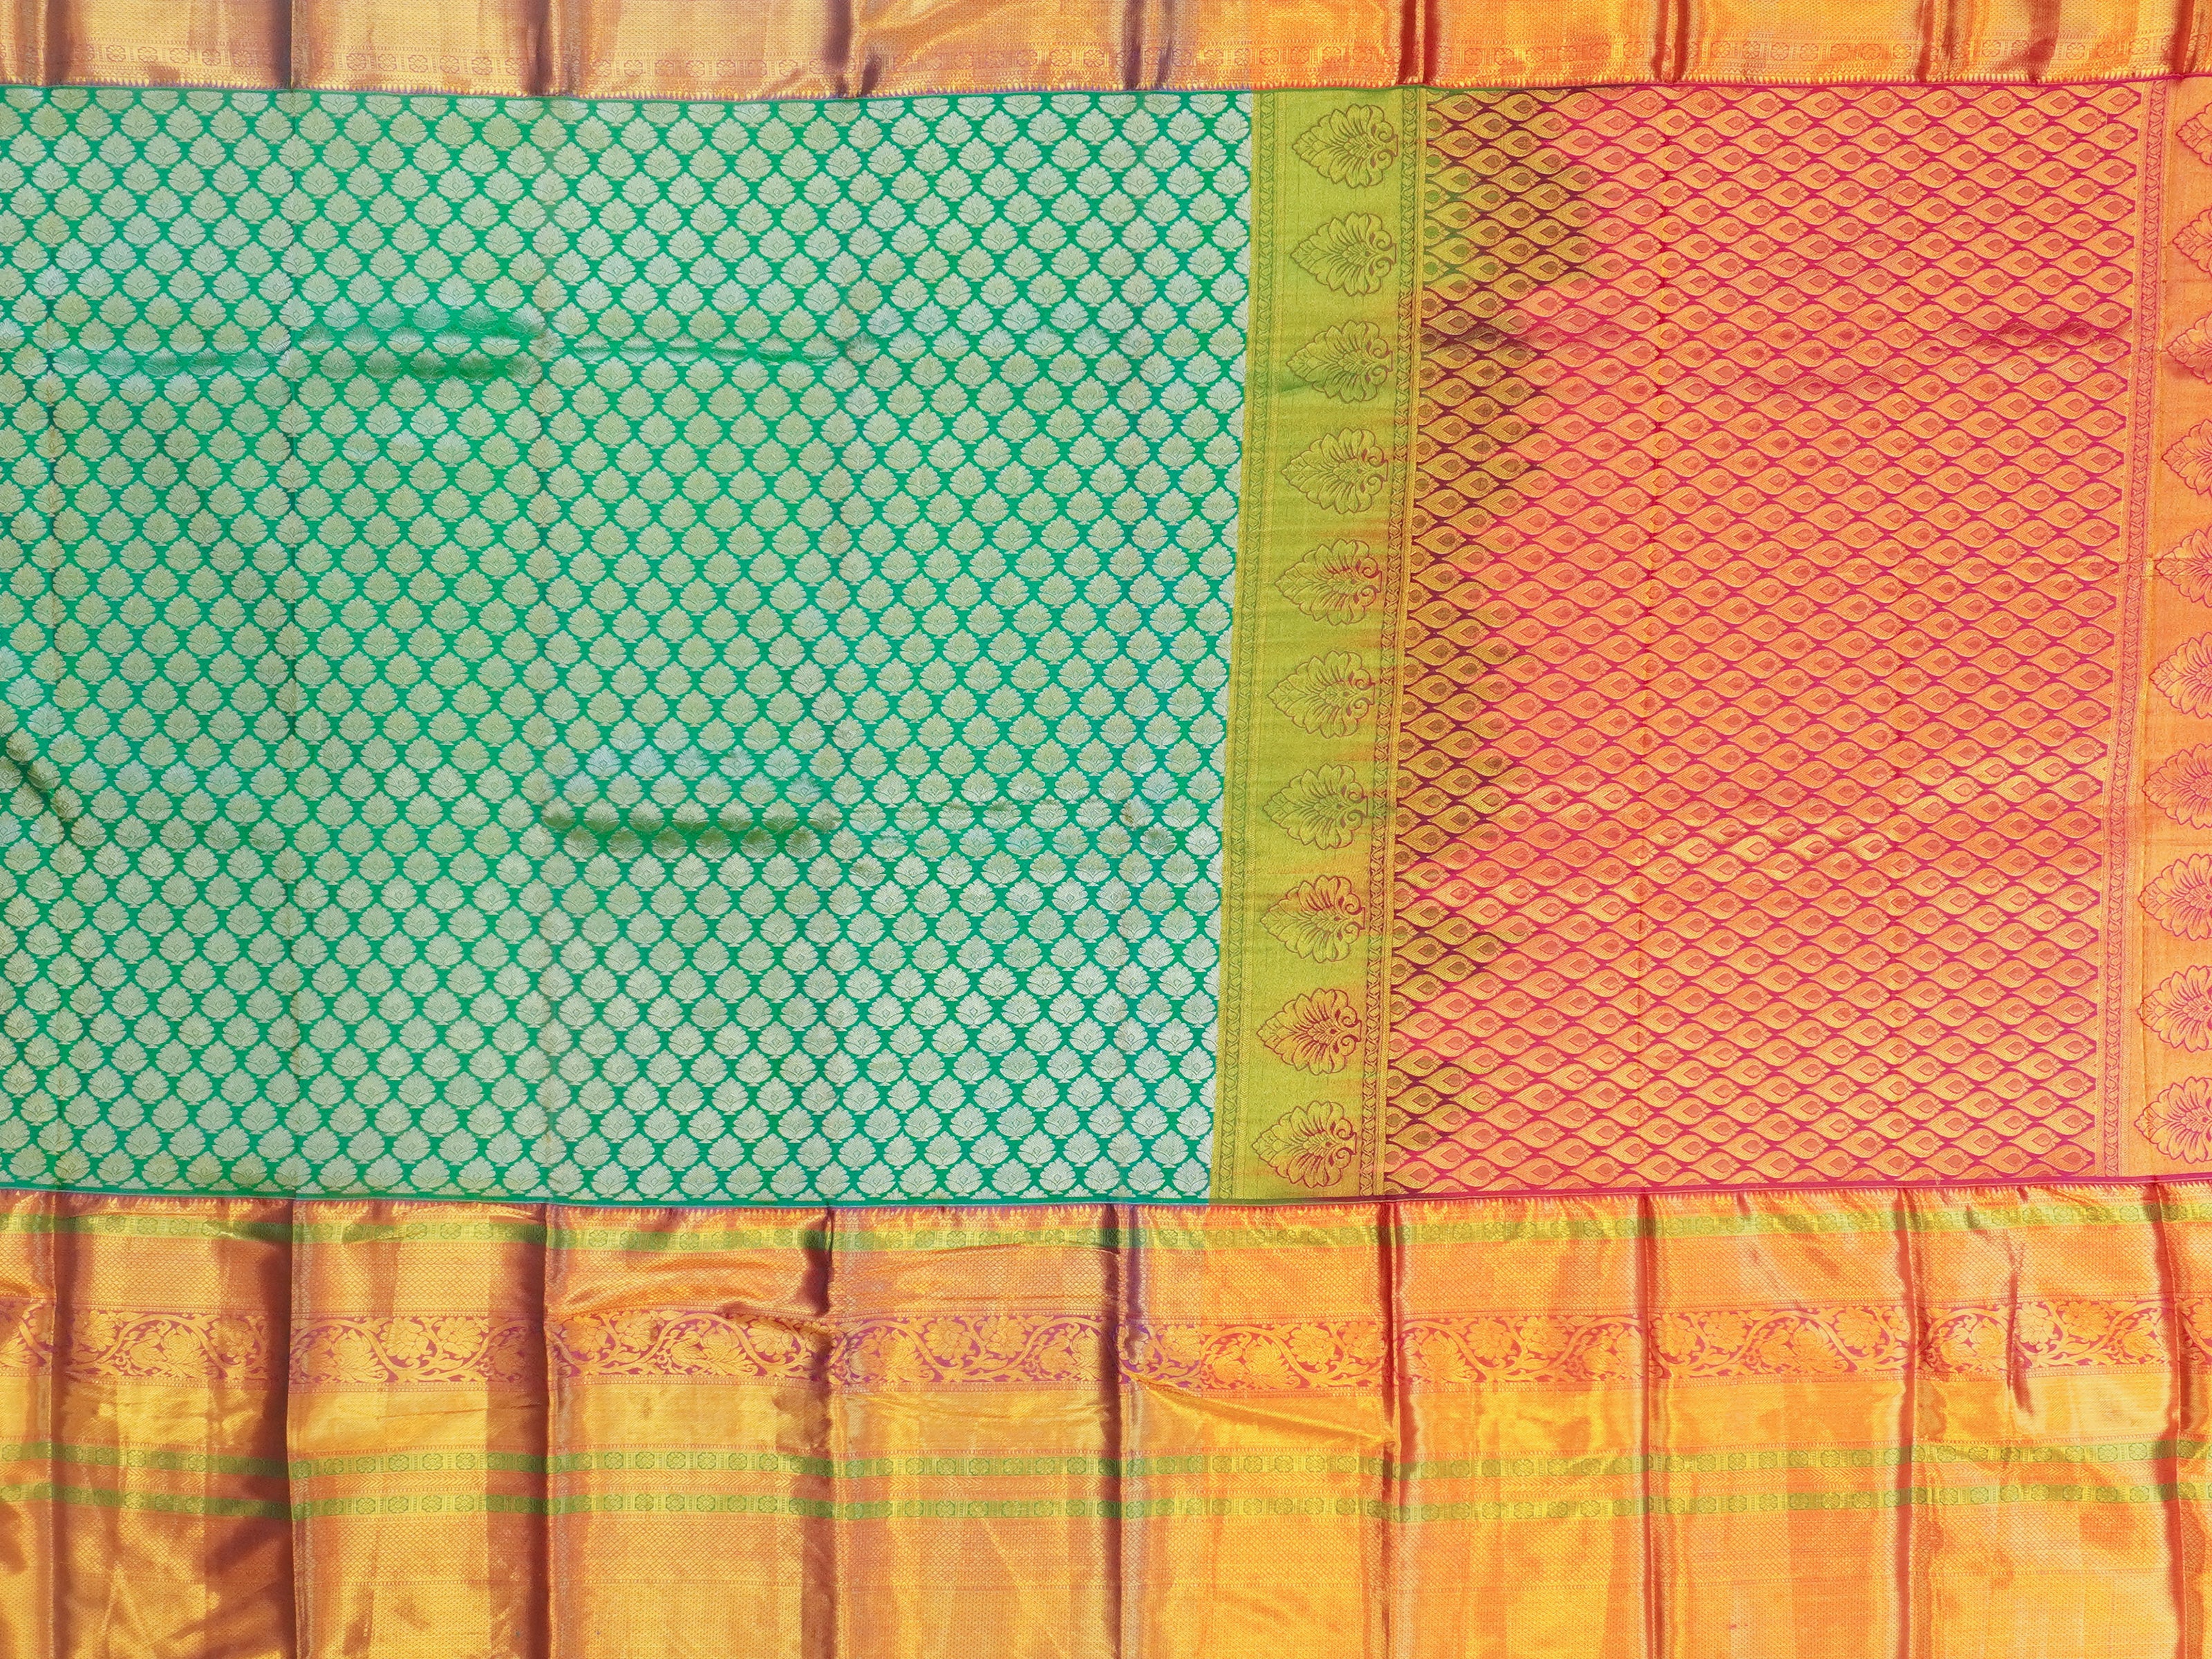 JSSB-447 | Green & Pink Kanchi Pattu Saree